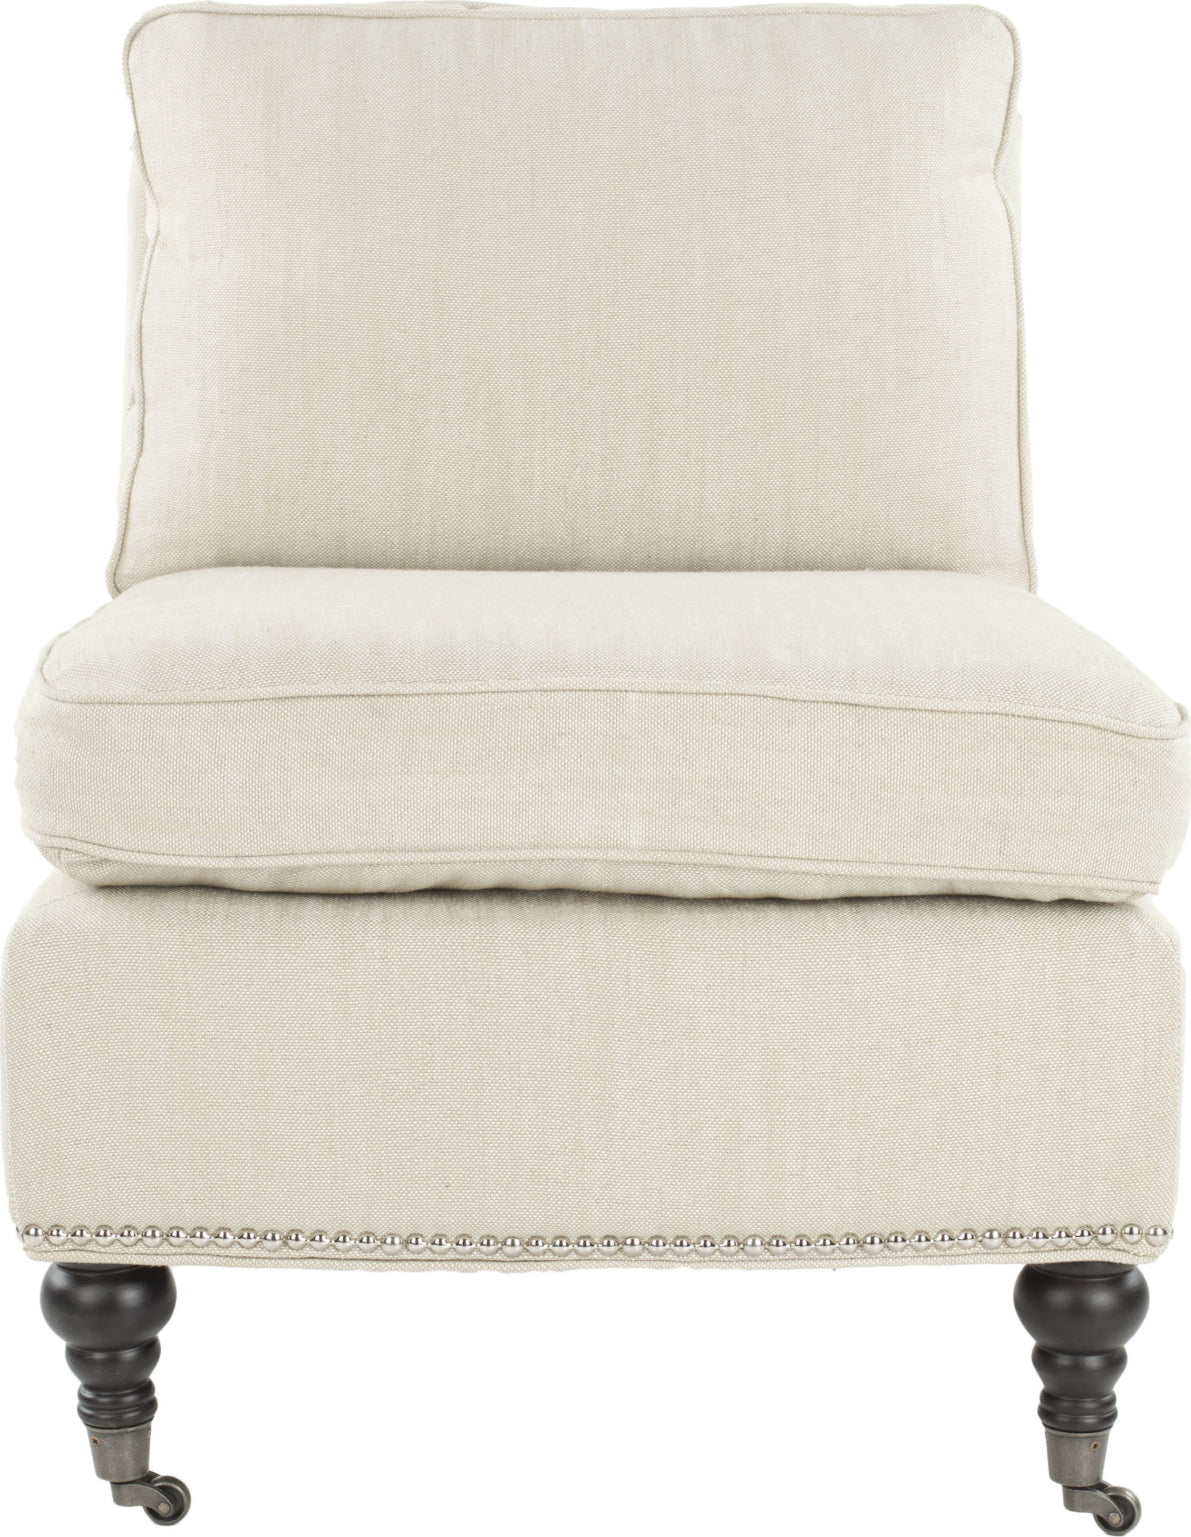 Safavieh Randy Slipper Chair Off White and Espresso Furniture main image